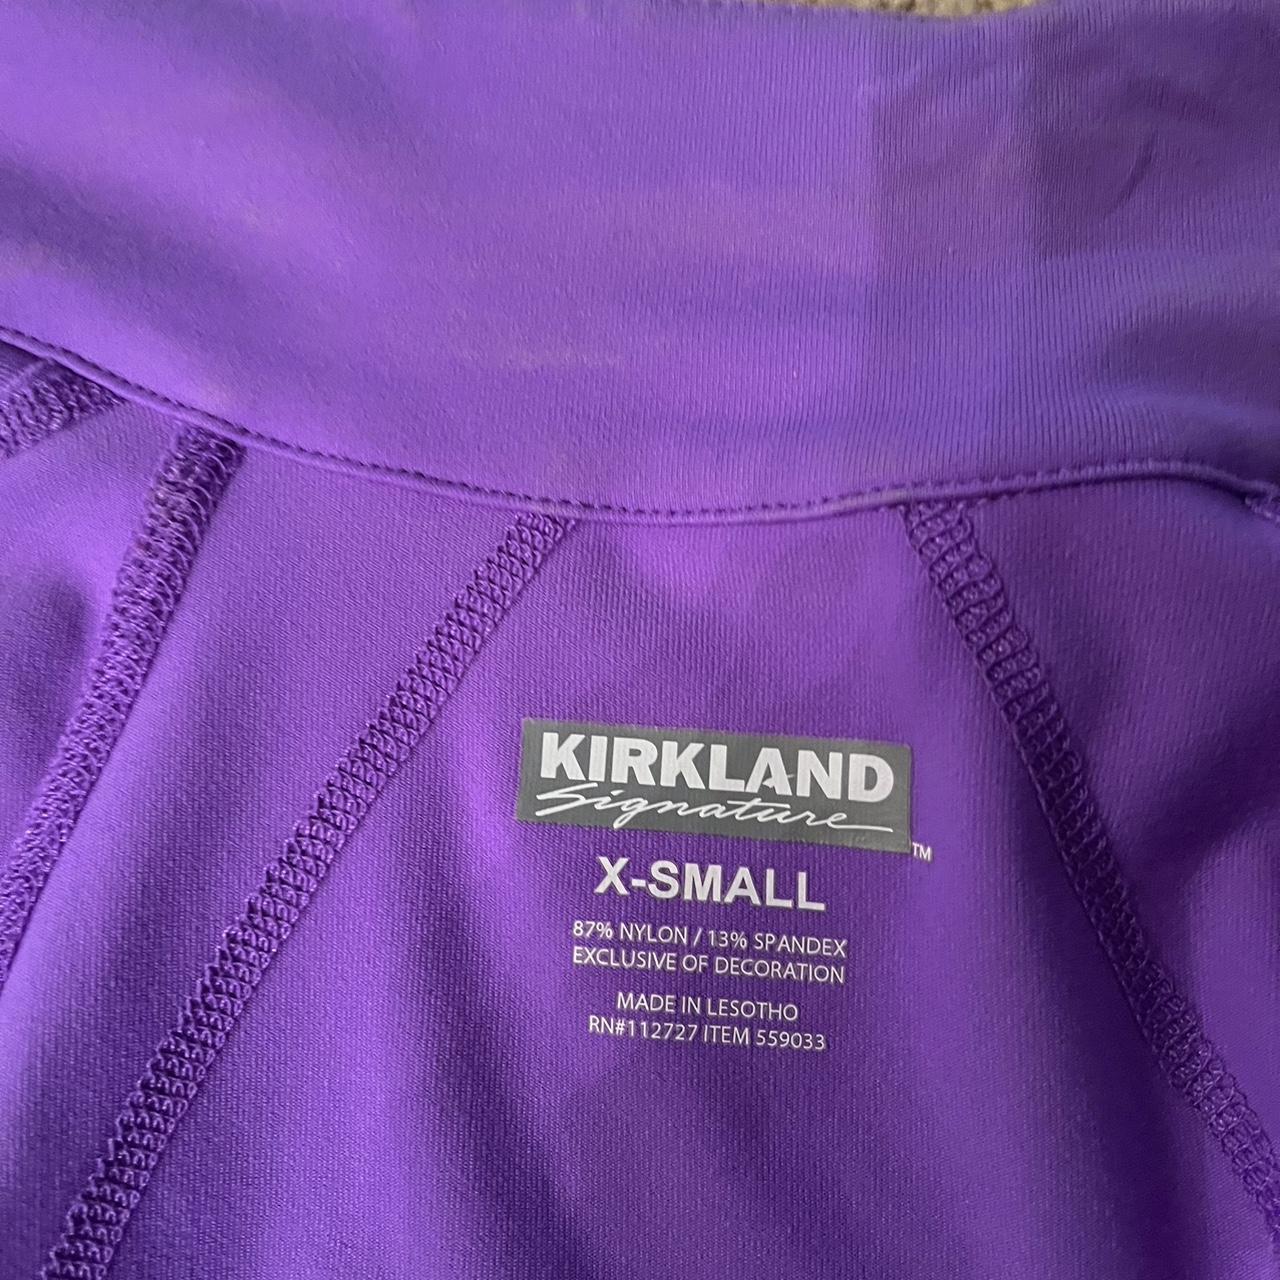 Lululemon look alike Kirkland jacket in size XS